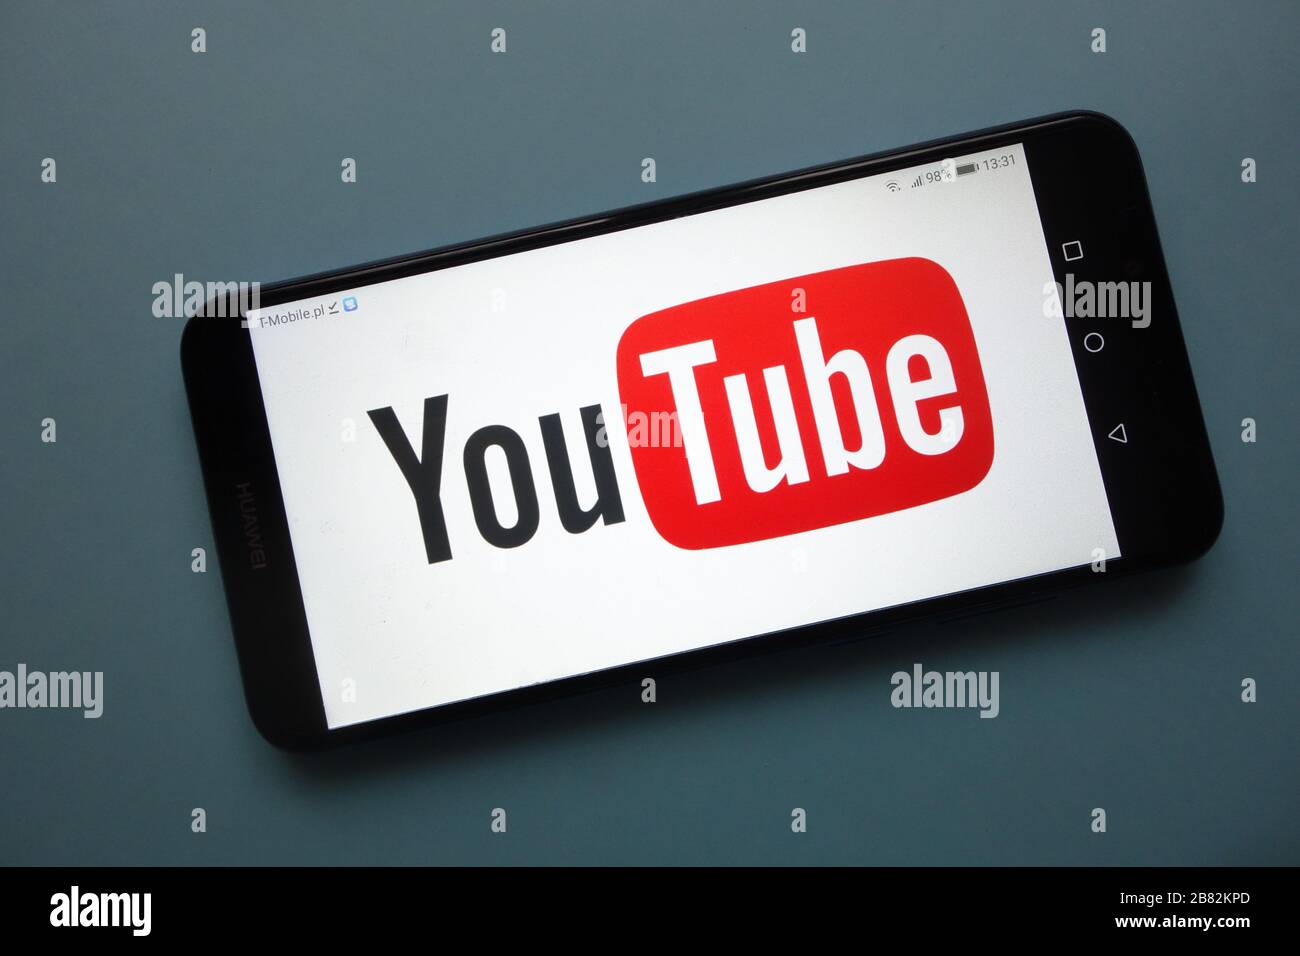 Youtube logo on smartphone Stock Photo - Alamy